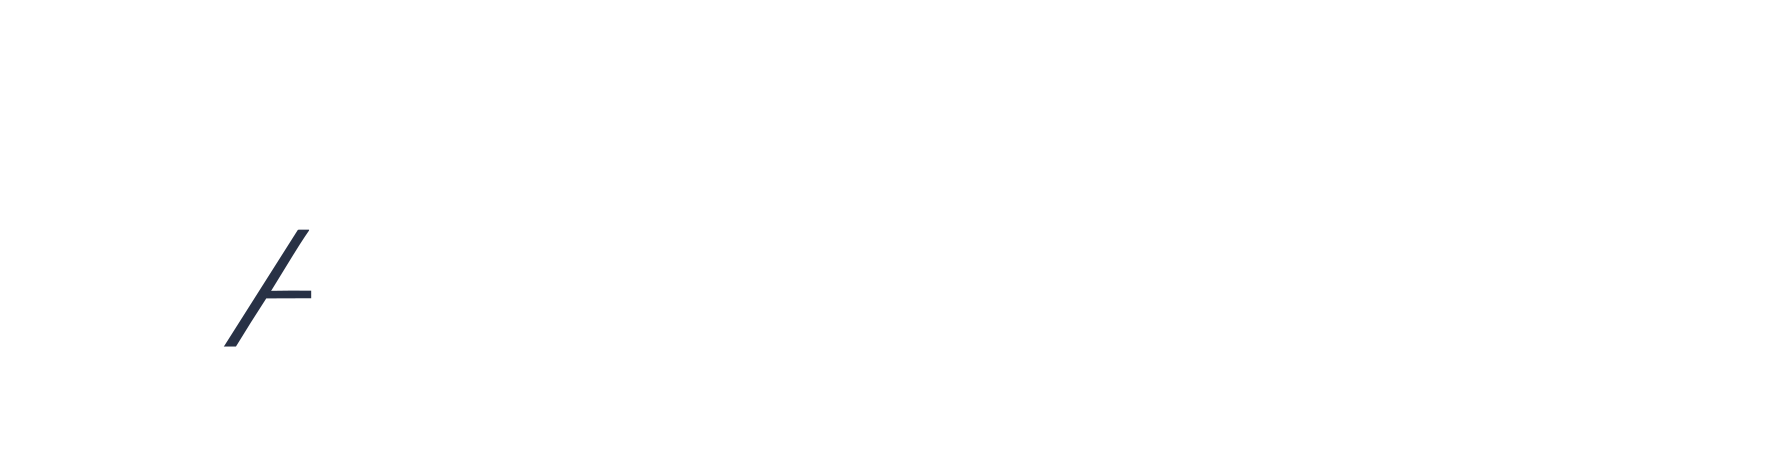 advertiseagents.com Logo